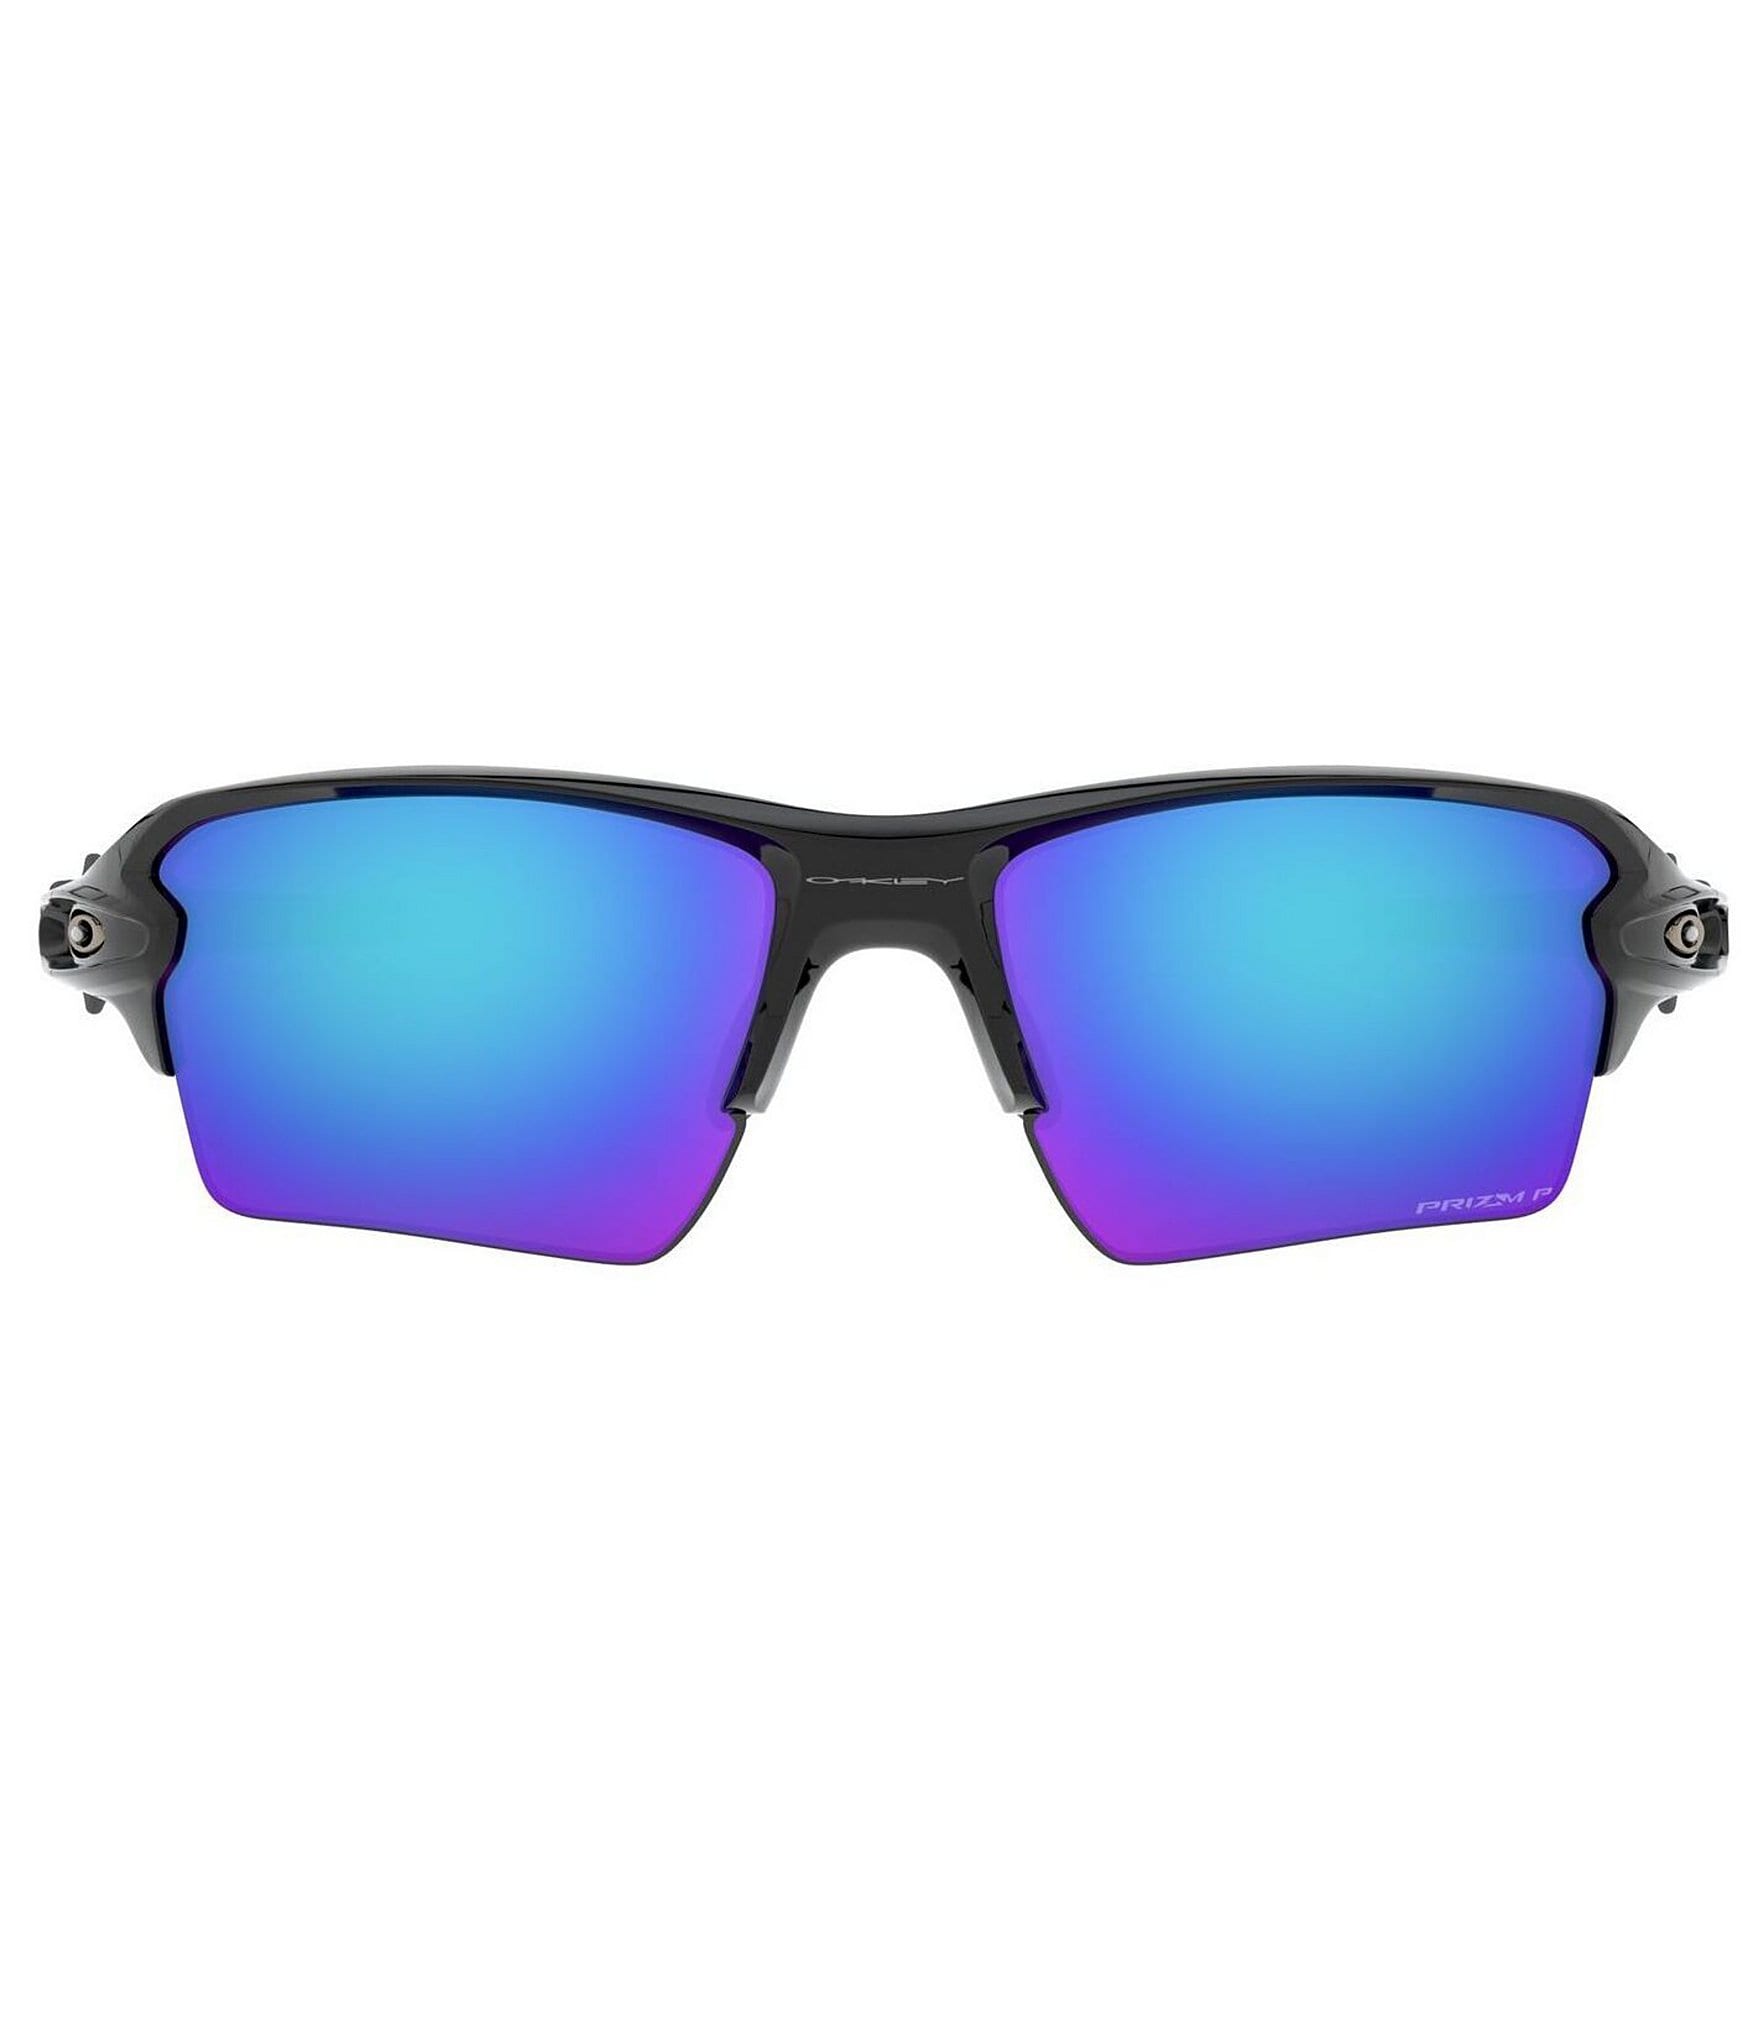 Introducir 91+ imagen oakley flak polarized sunglasses - Thptnganamst ...